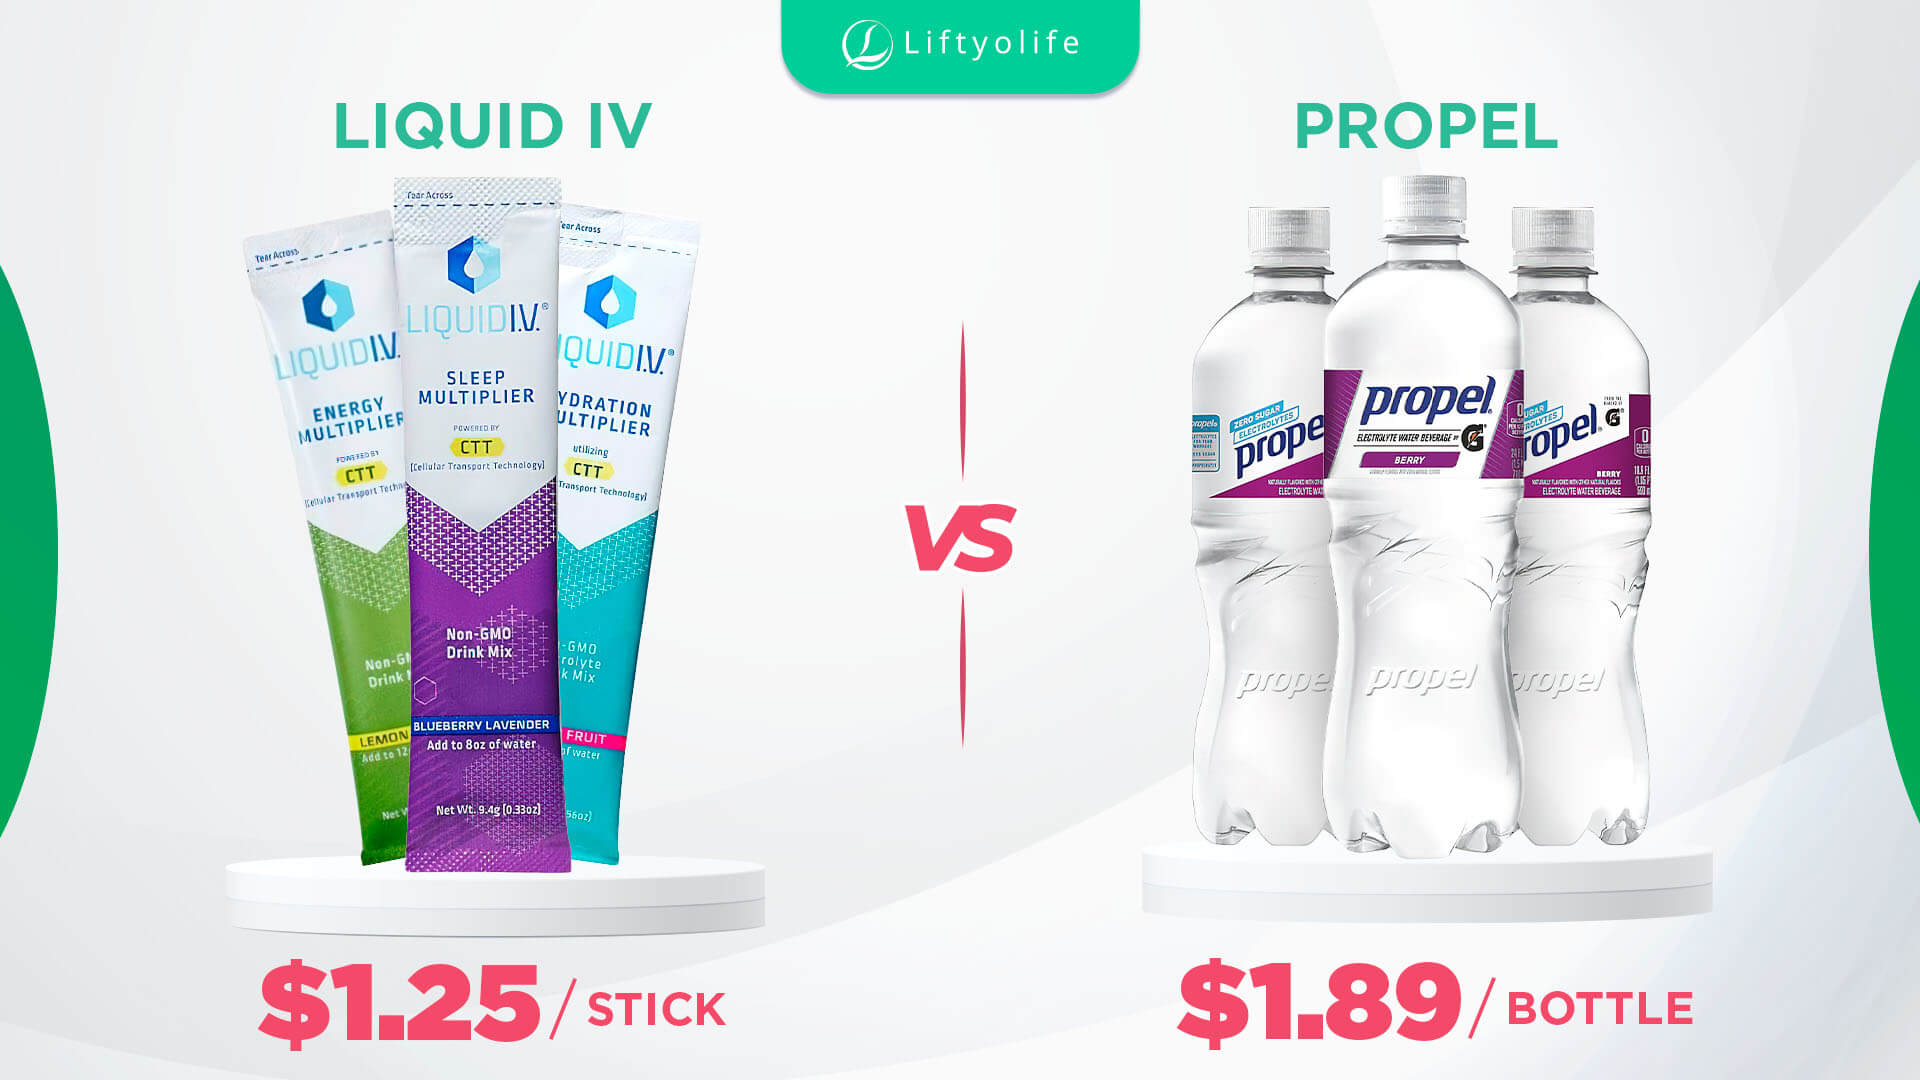 Liquid IV vs Propel: The Price